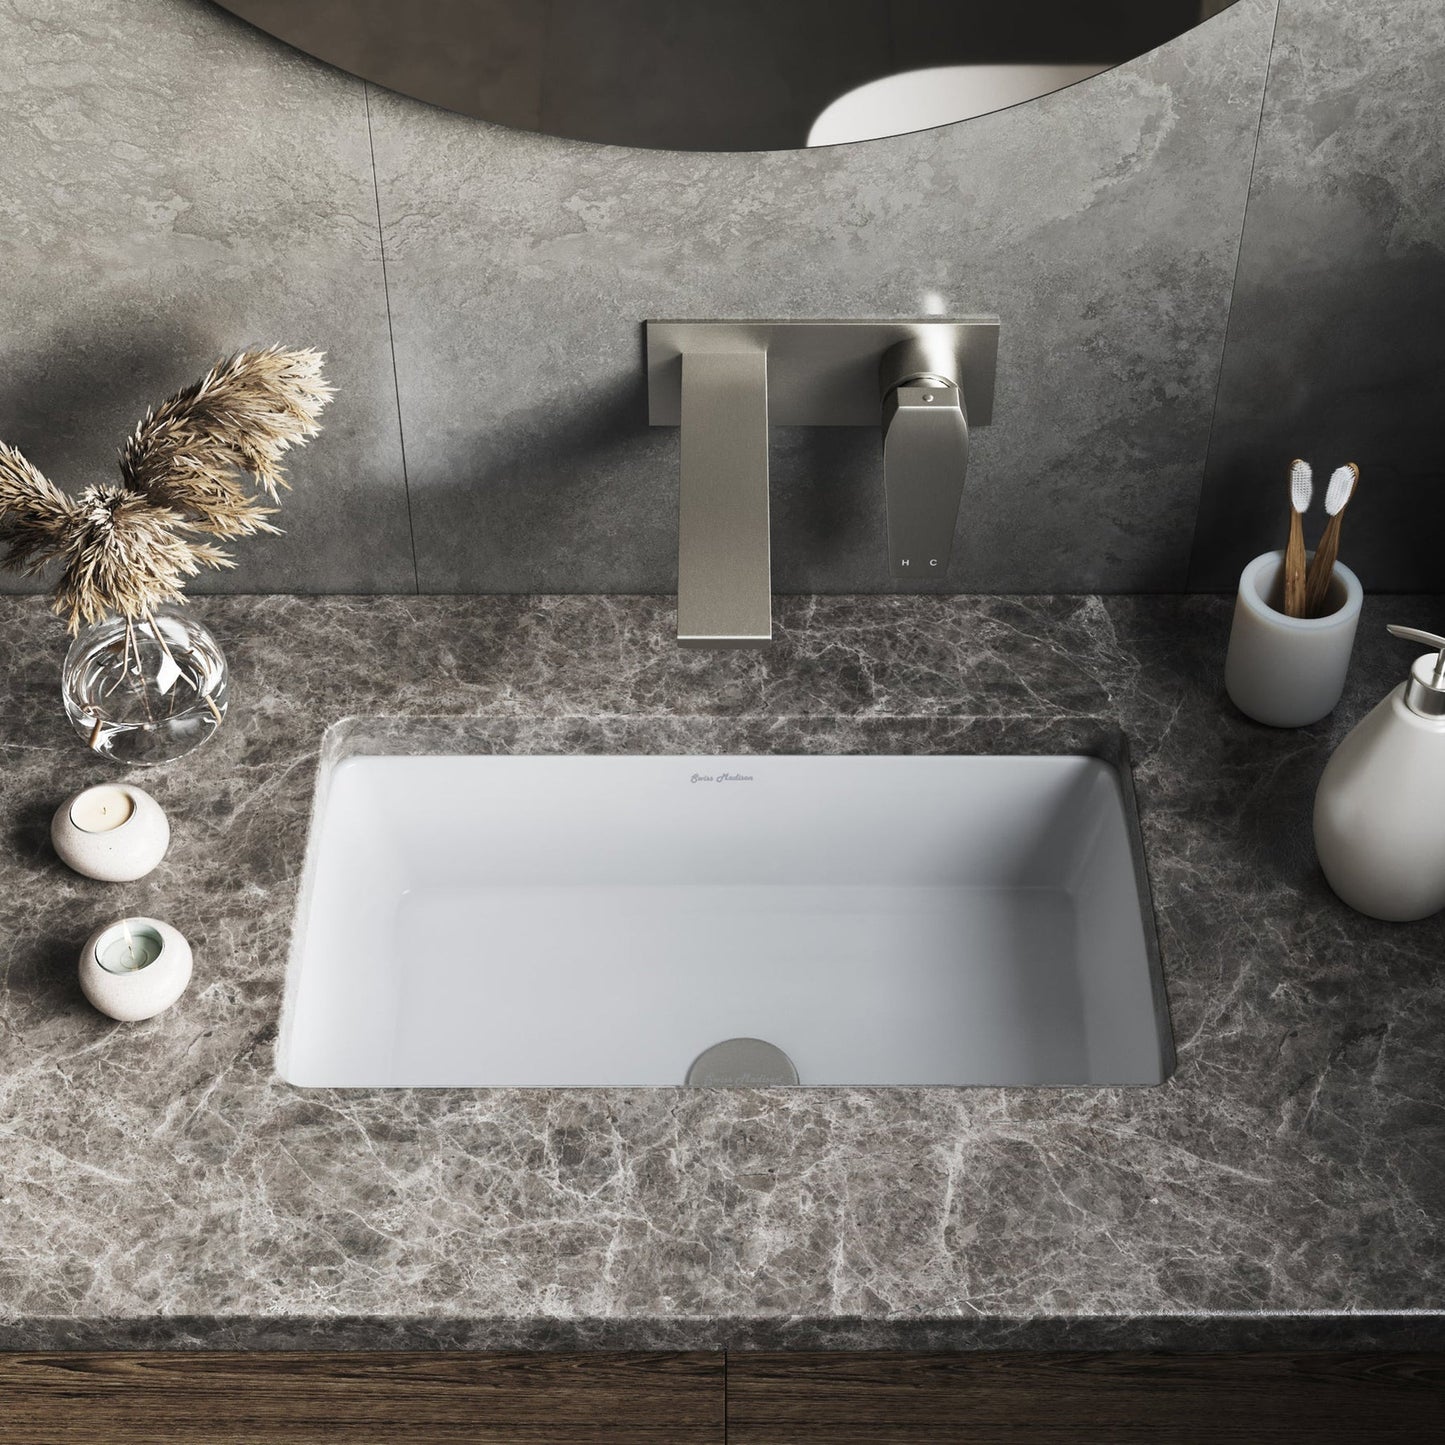 Swiss Madison Voltaire 21" x 13" White Rectangle Ceramic Bathroom Undermount Sink